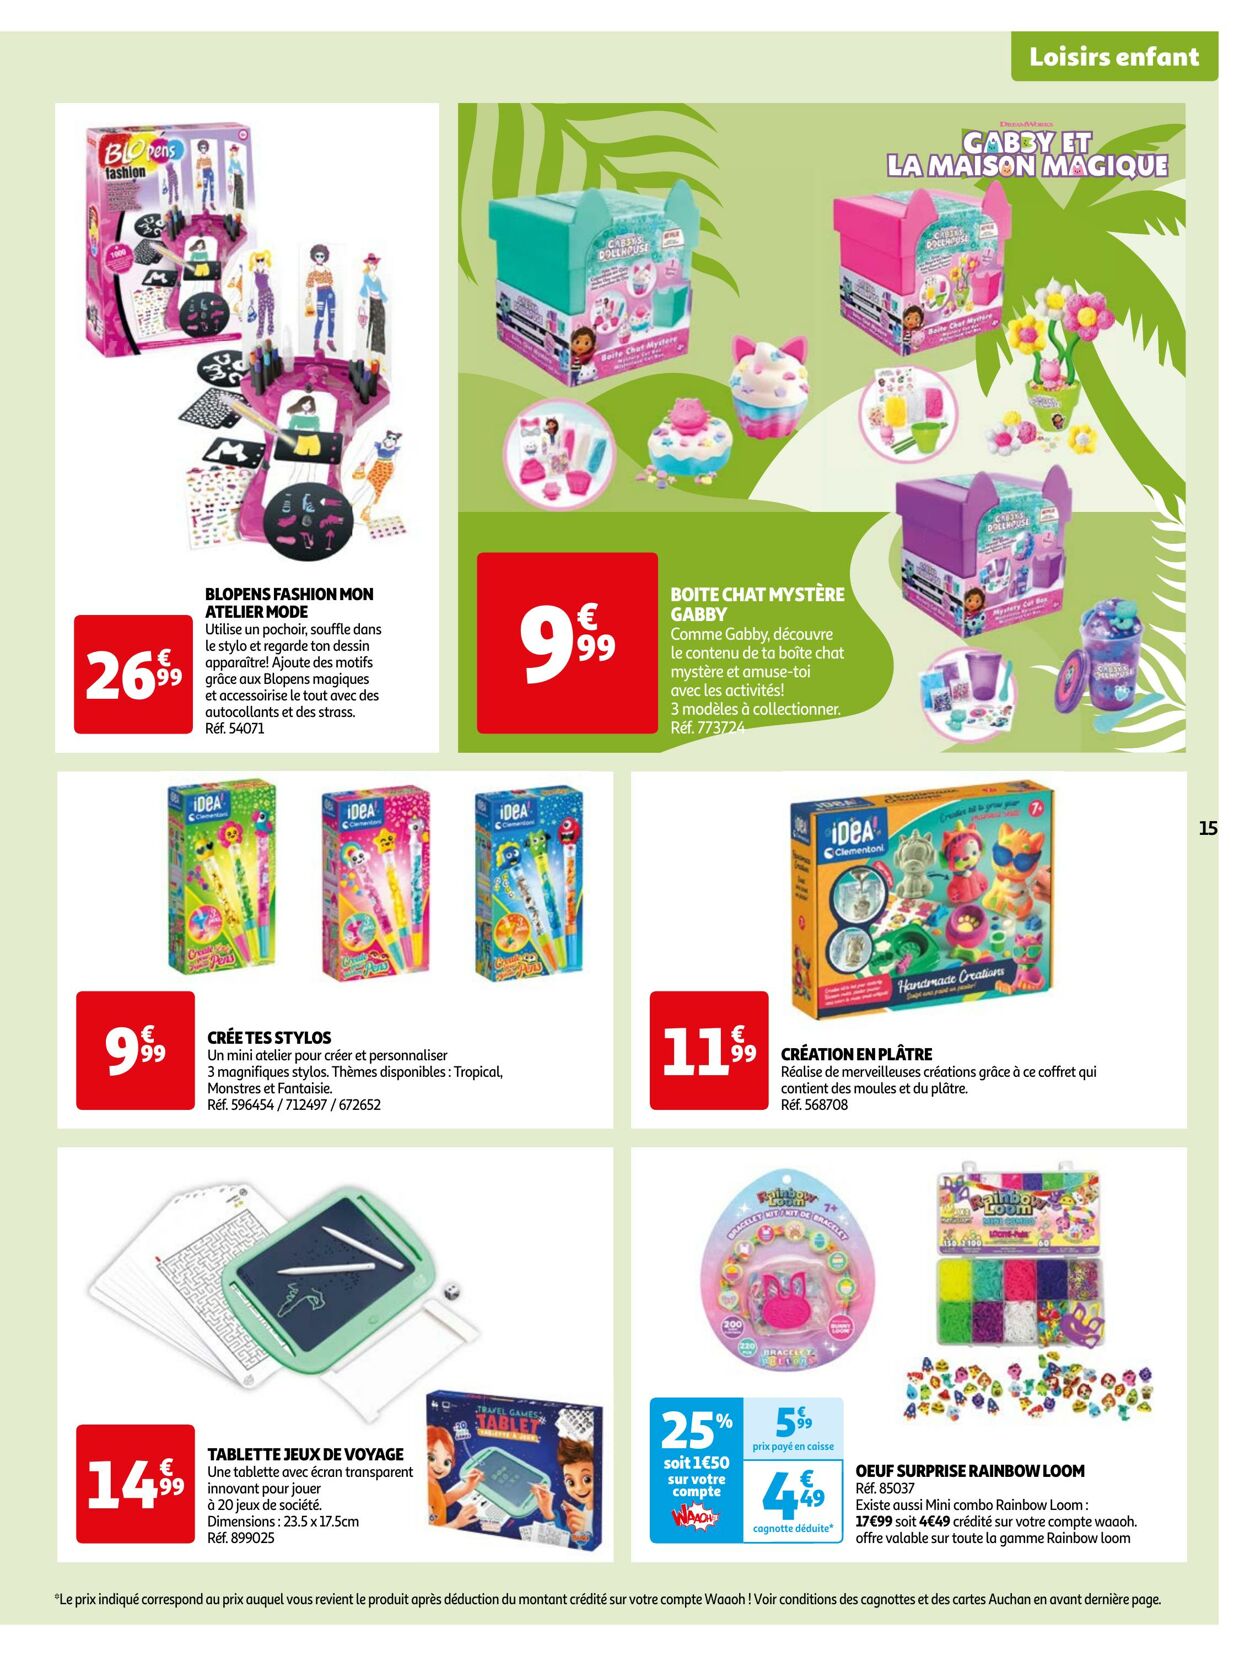 Catalogue Auchan 19.06.2024 - 01.07.2024